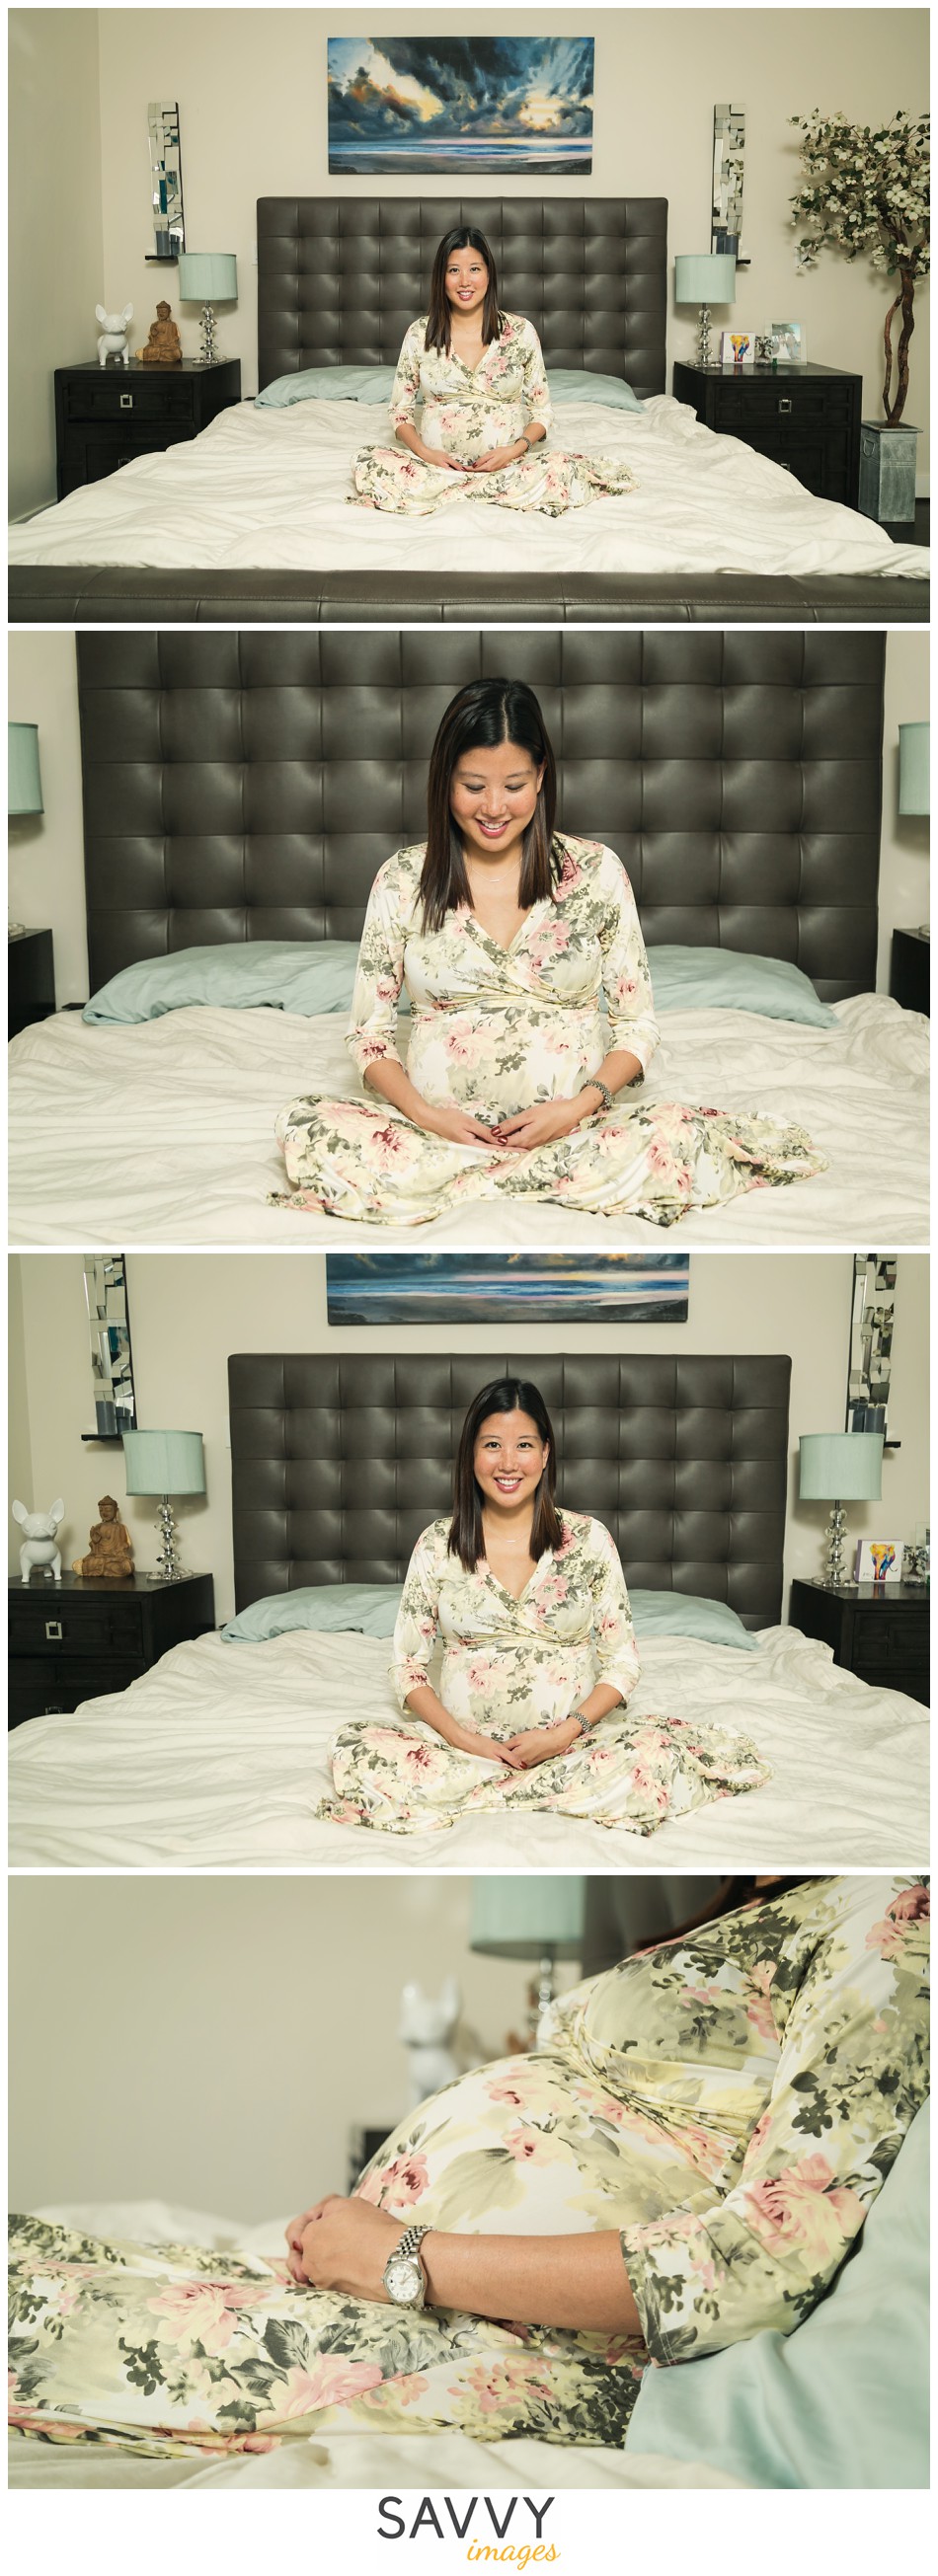 Savvy Images - Houston Maternity Photographer - Intimate maternity photos